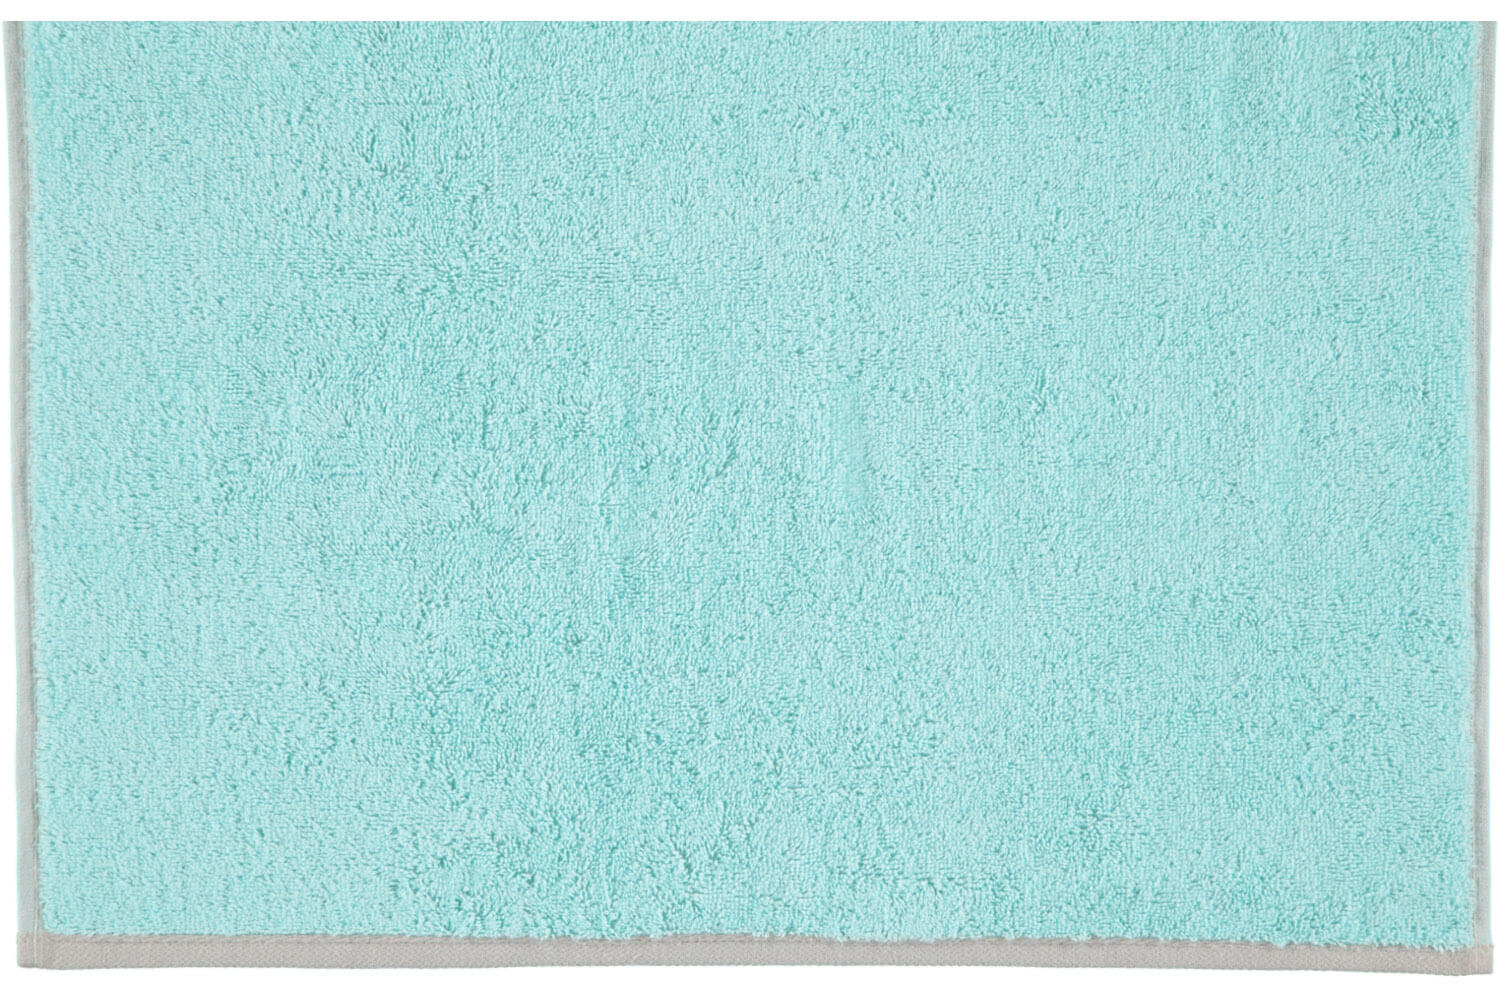 Хлопковое полотенце Limited # 1 Doubleface Mint ☞ Размер: 30 x 50 см